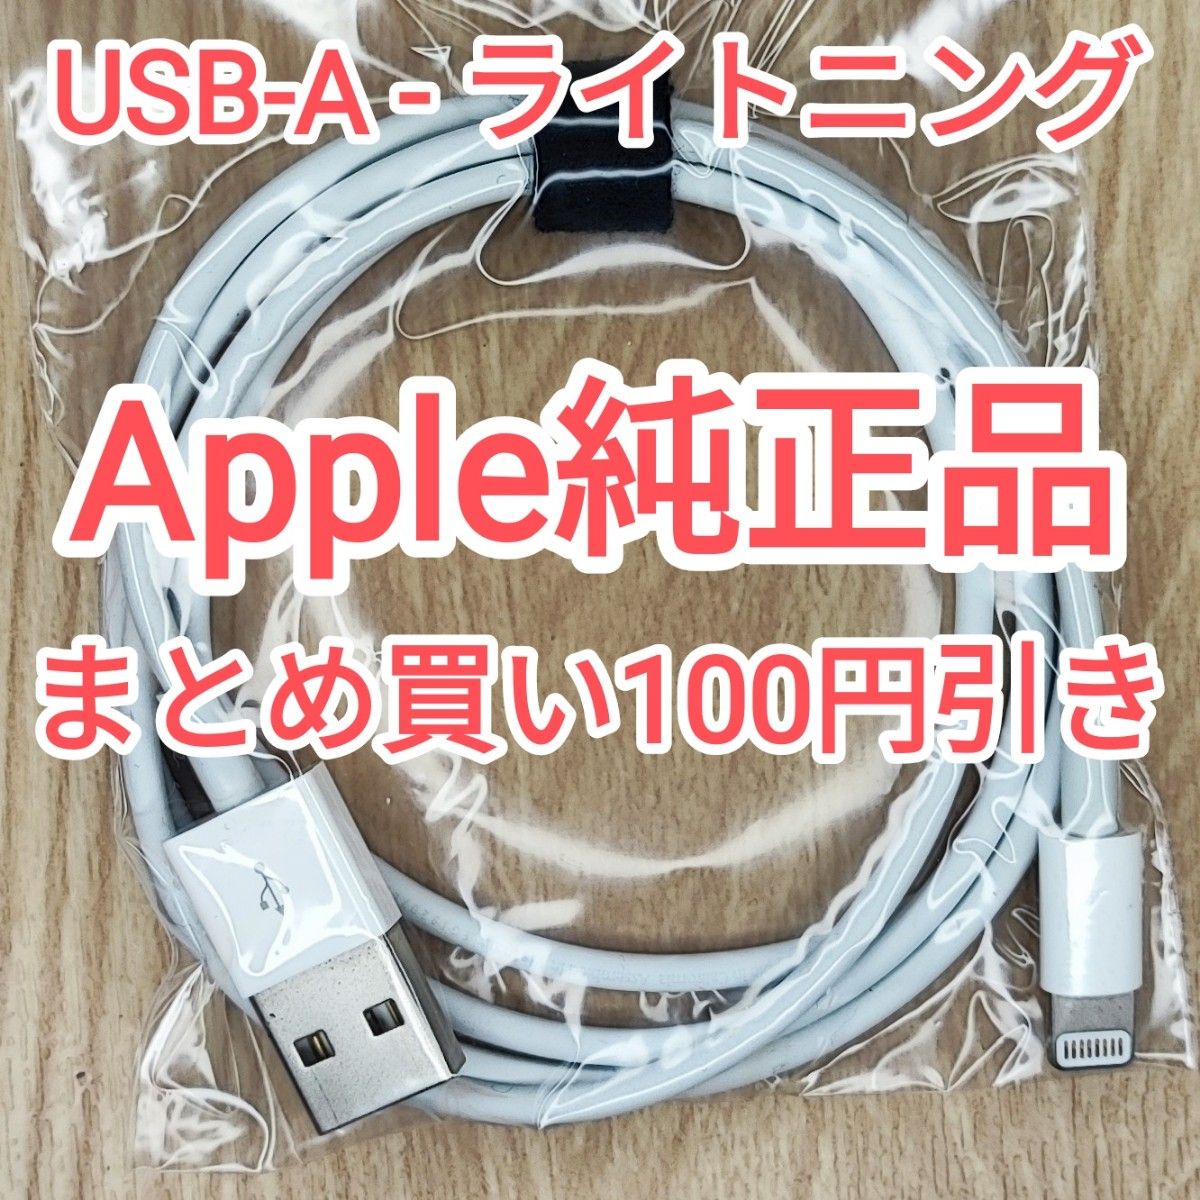 15　apple純正 ライトニングケーブル iPhone iPod touch 純正品付属品正規品